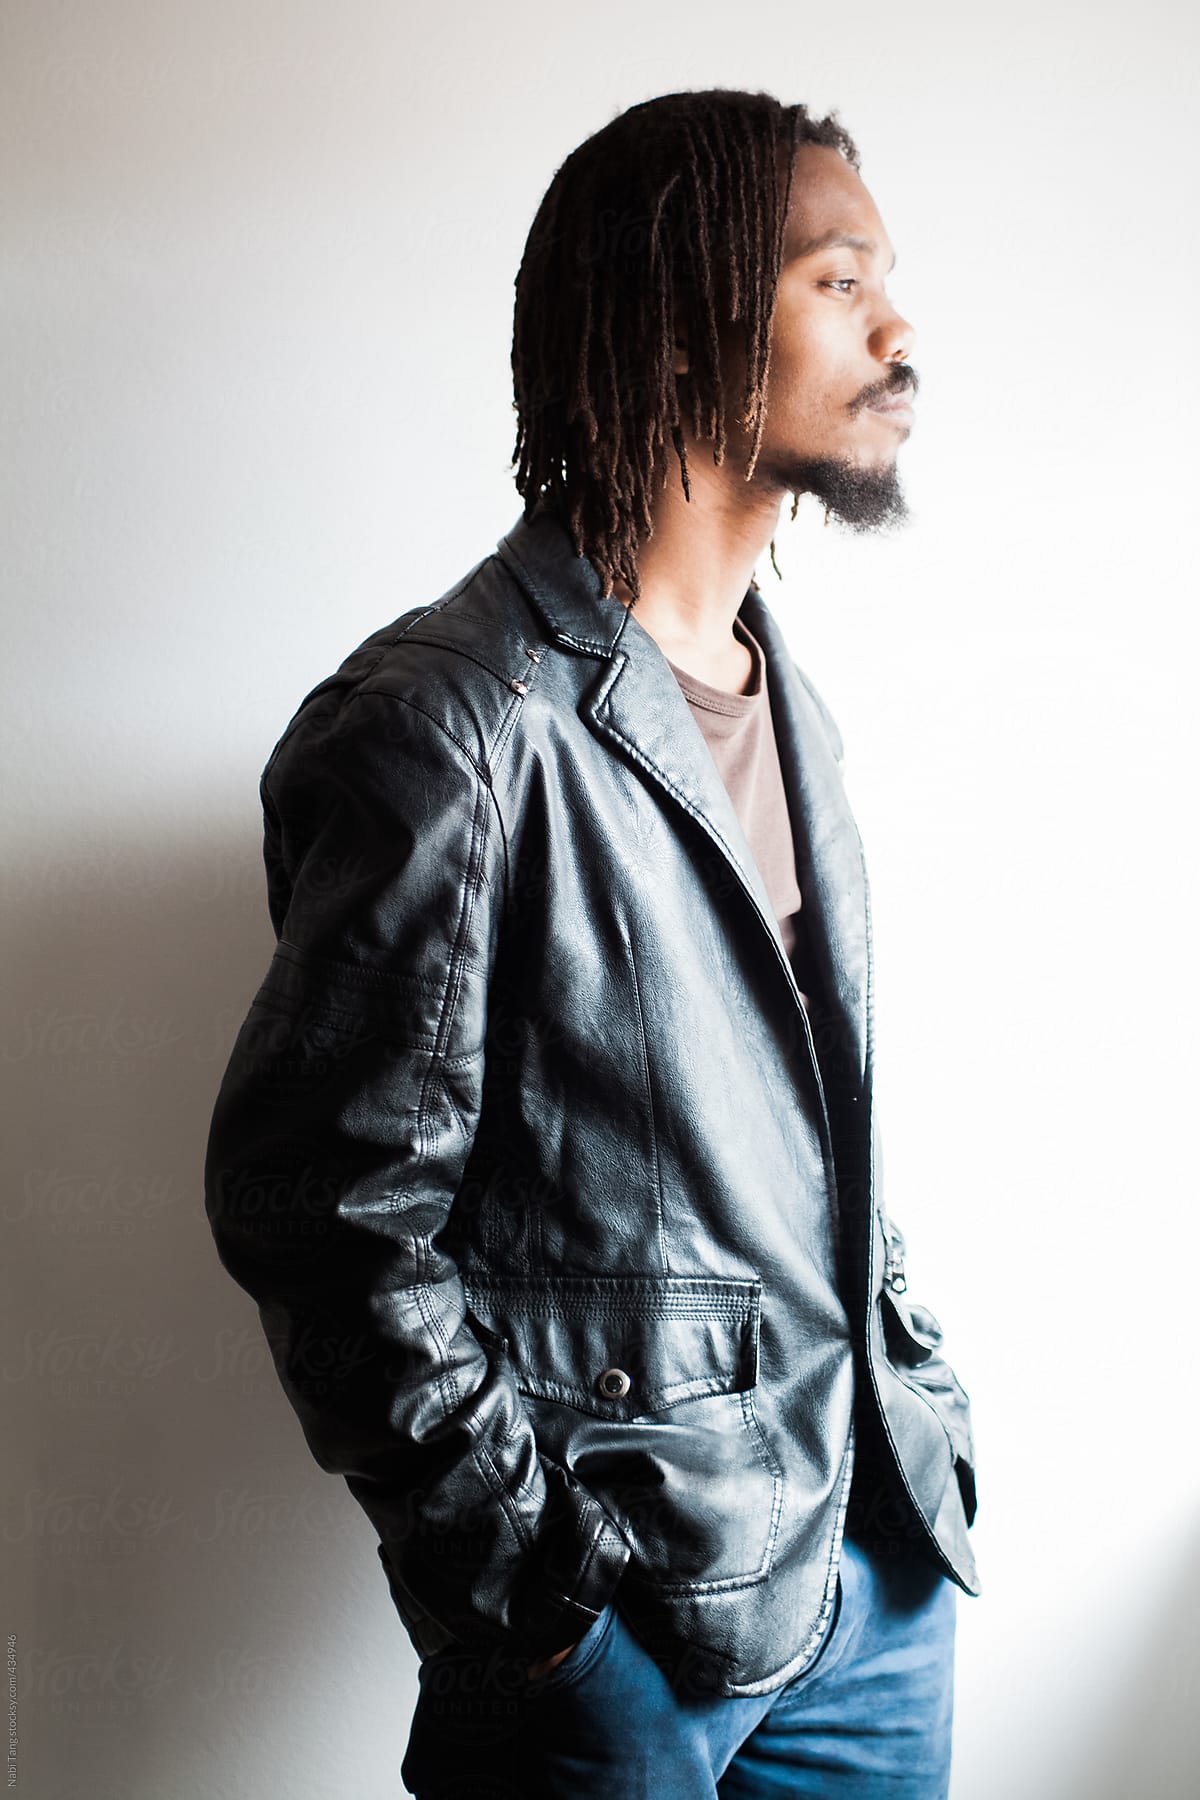 Handsome African guy portrait in black leather jacket